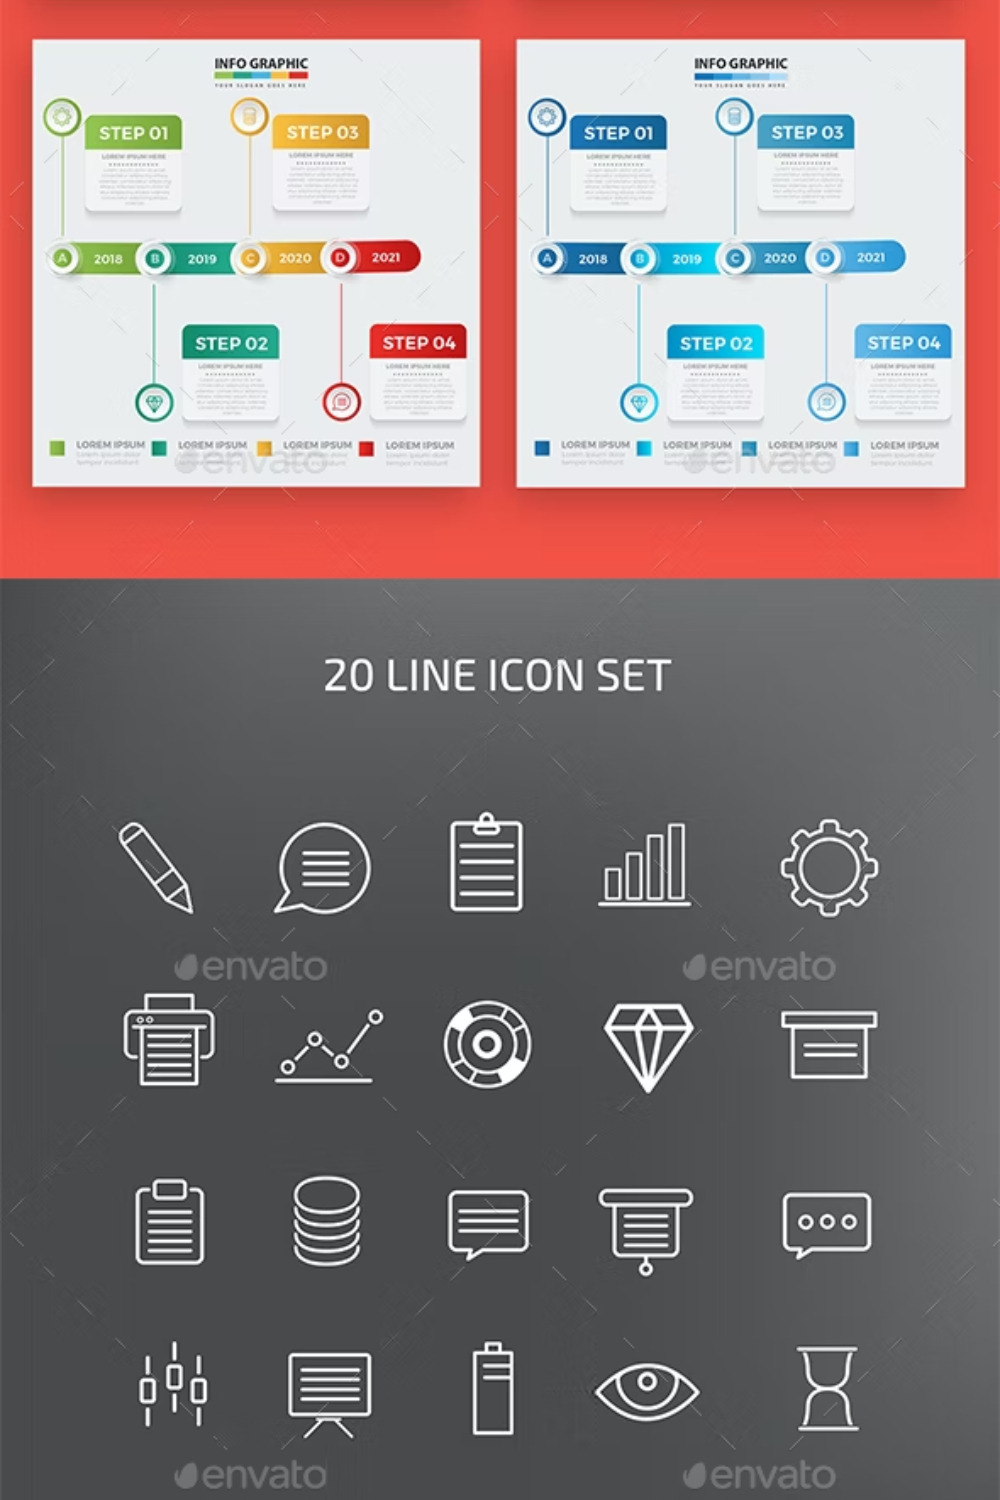 Timeline Infographic Design Pinterest Cover.